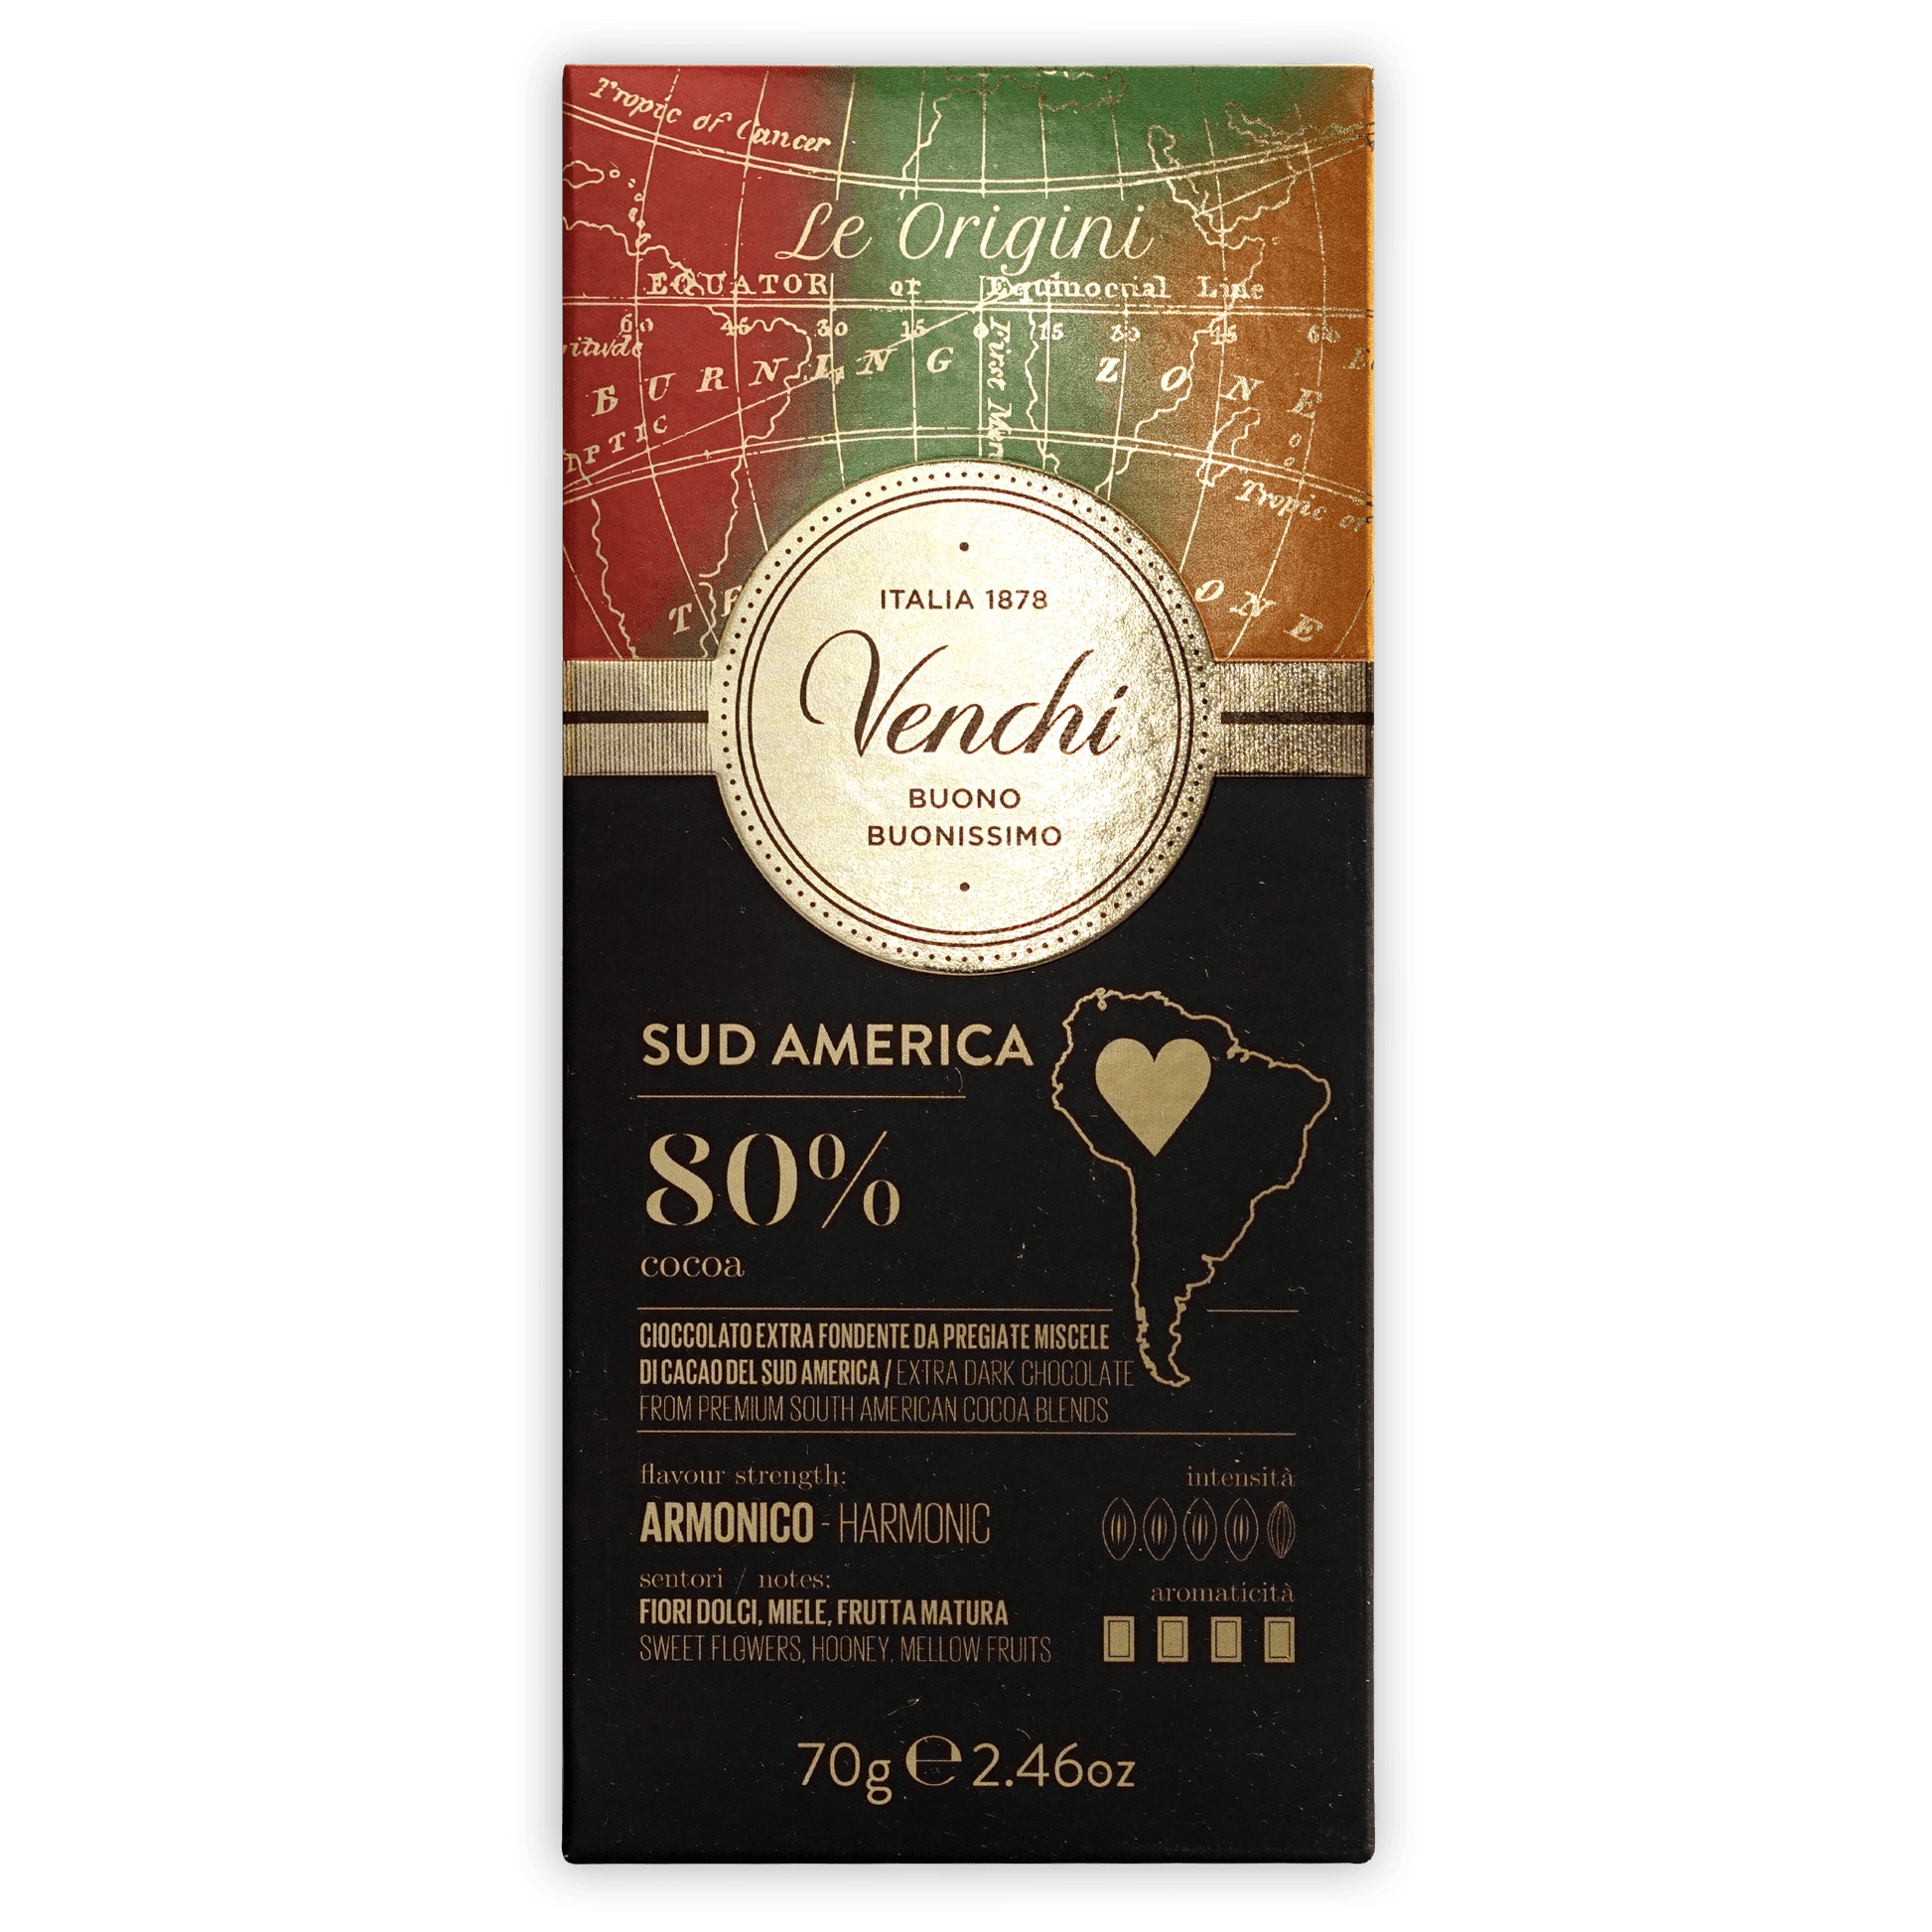 Venchi Sud (South) America Chocolate 80%